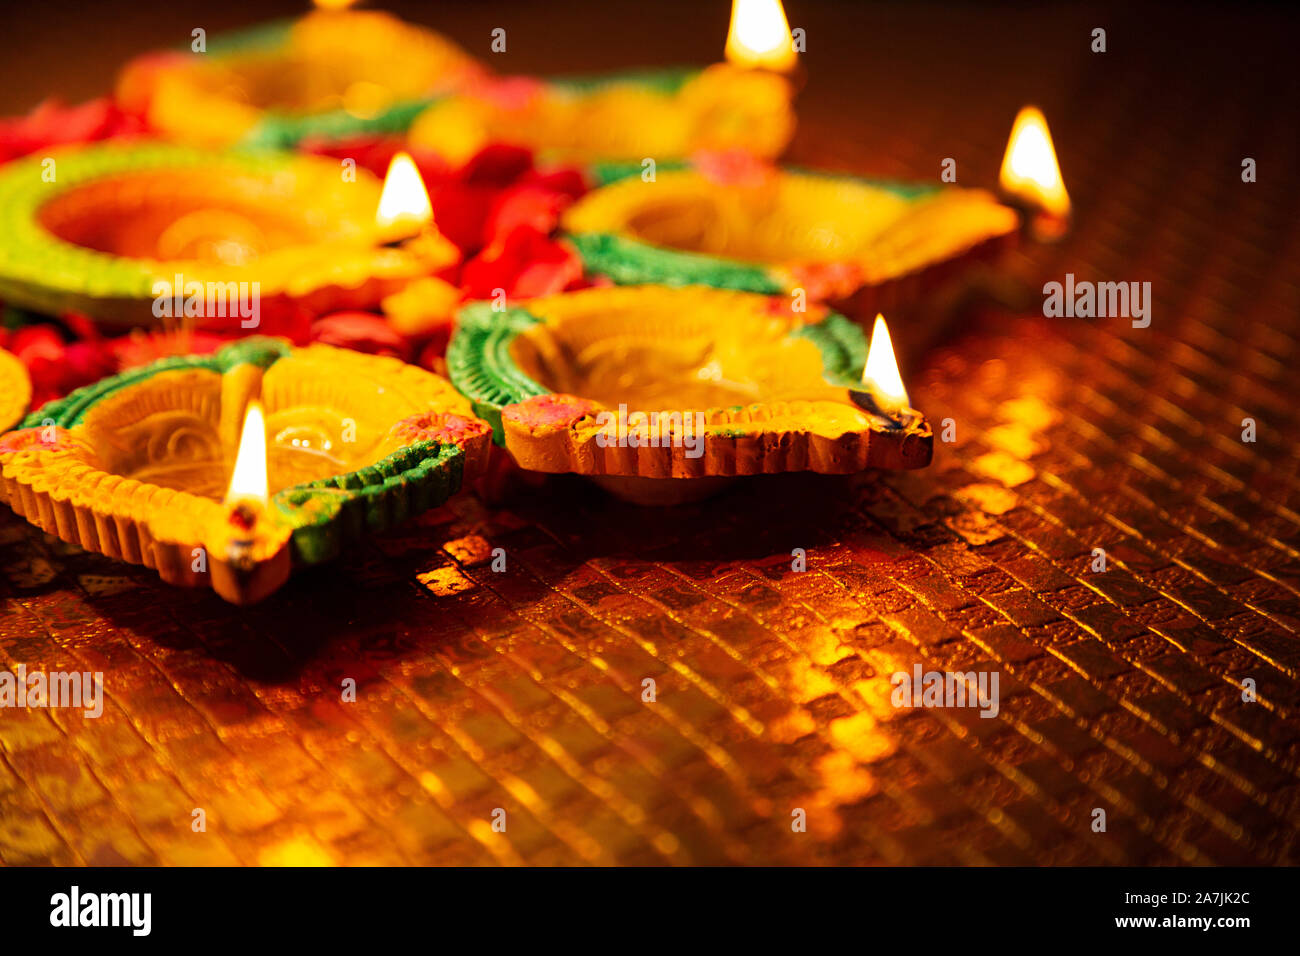 Nobody Shot Close-up Lighting Oil-lamps Diyas Illuminated on-Diwali Festival Celebration Stock Photo